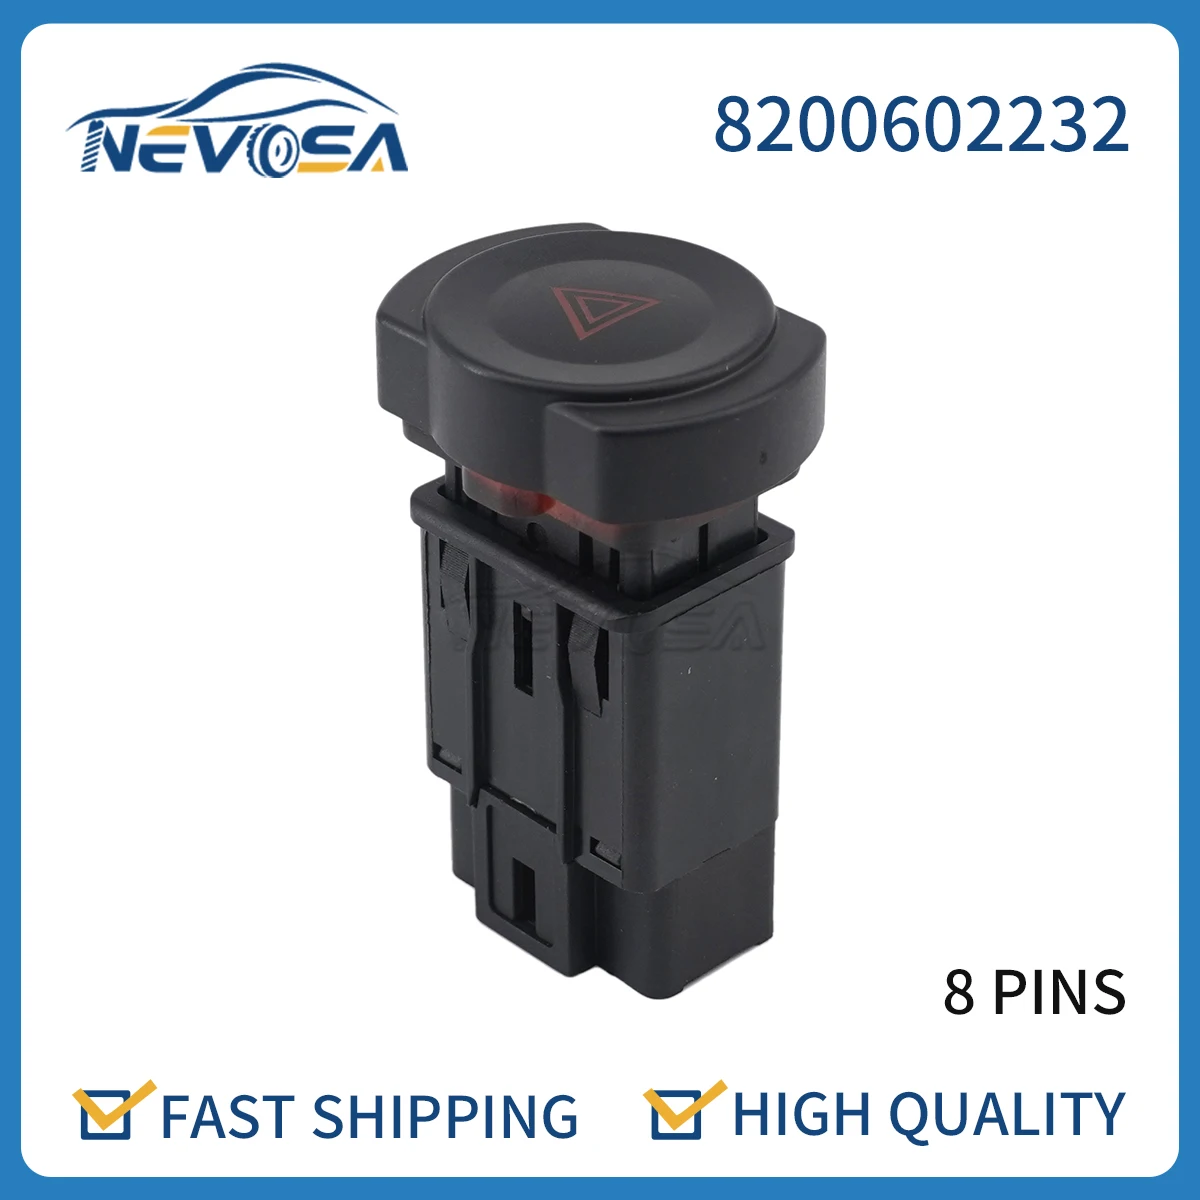 

Nevosa 8200602232 For Renault Aprio For Dacia Duster Sandero Car Power Emergency Hazard Warning Flash Light Single Button Switch